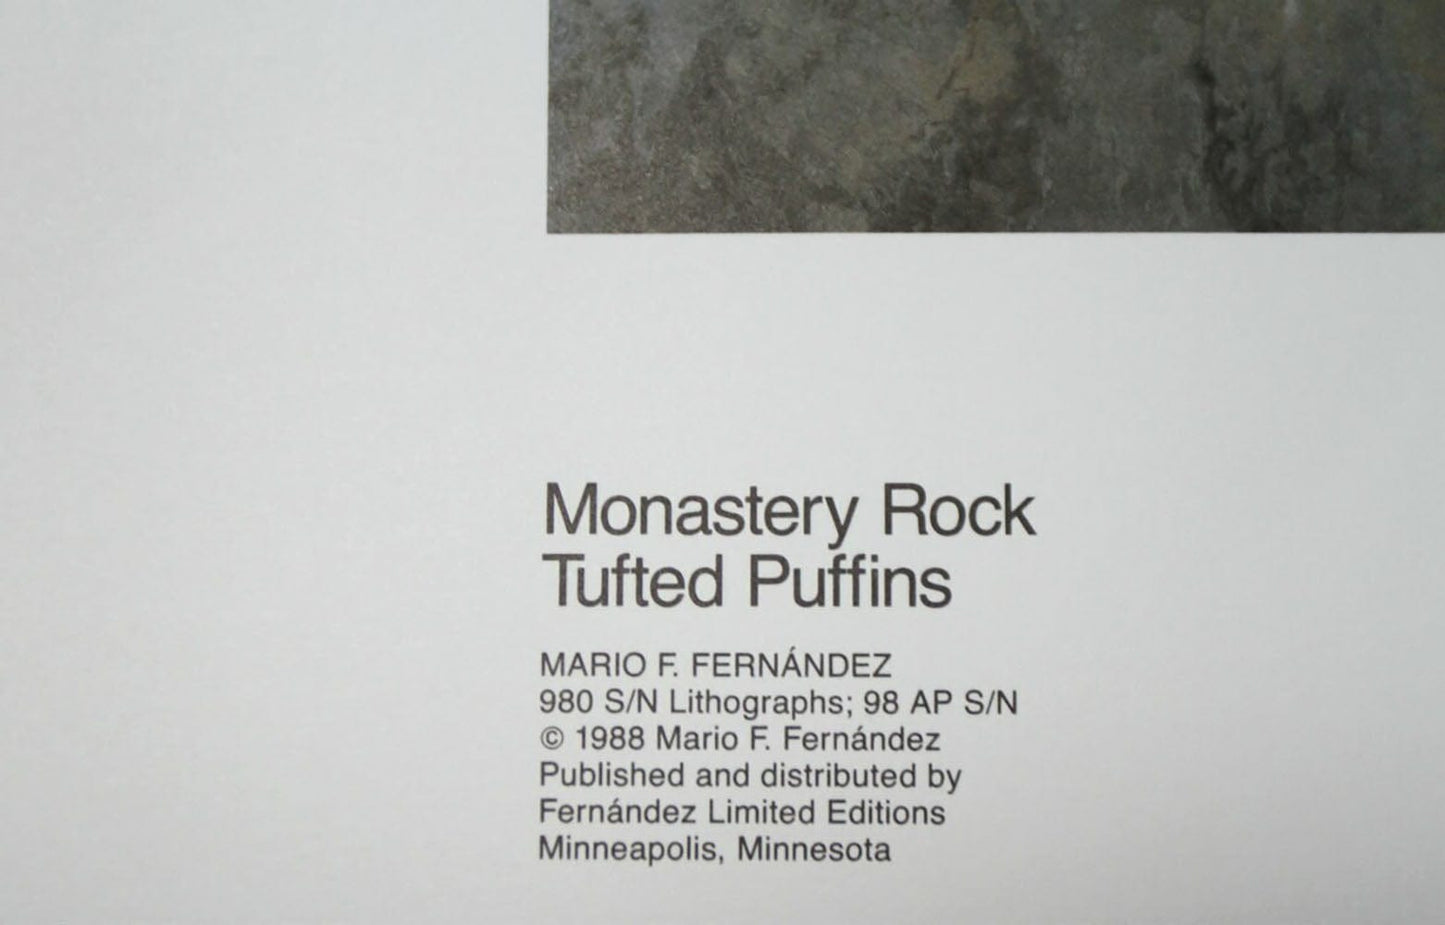 Mario F Fernandez; "Monestary Rock - Tufted Puffins"